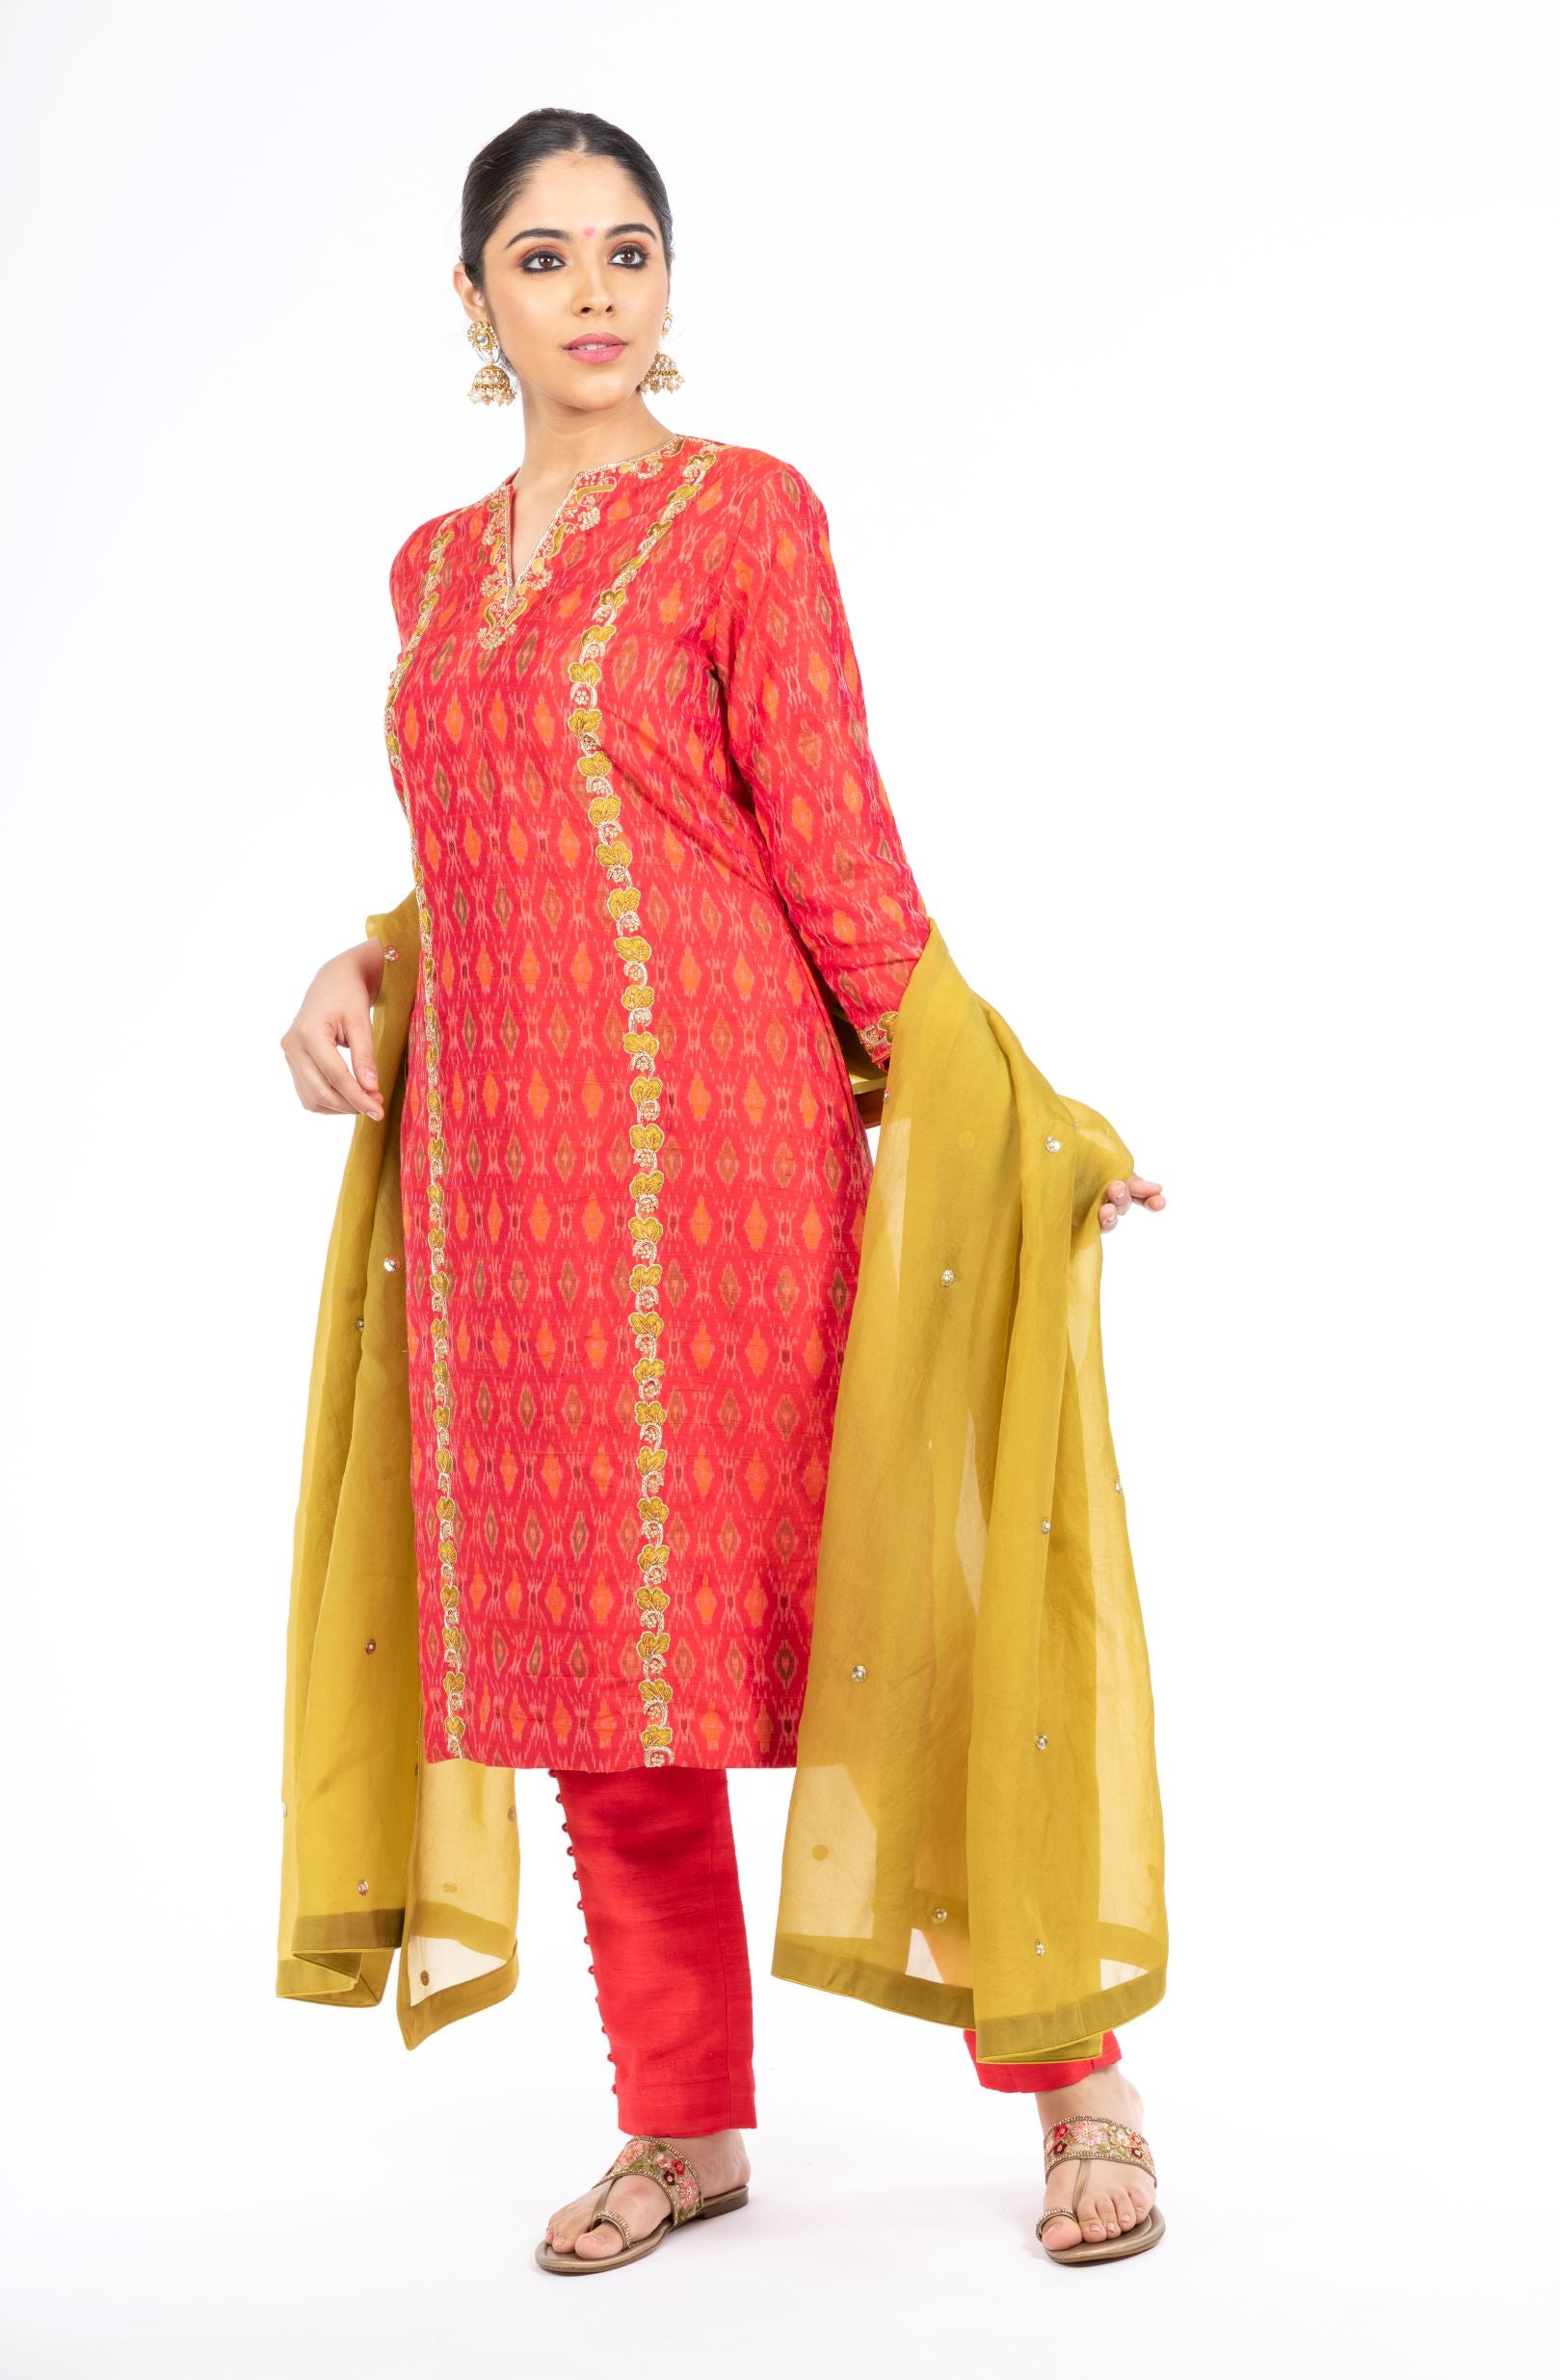 Stunning Red Color Ikkat Raw Silk Salwar Kameez